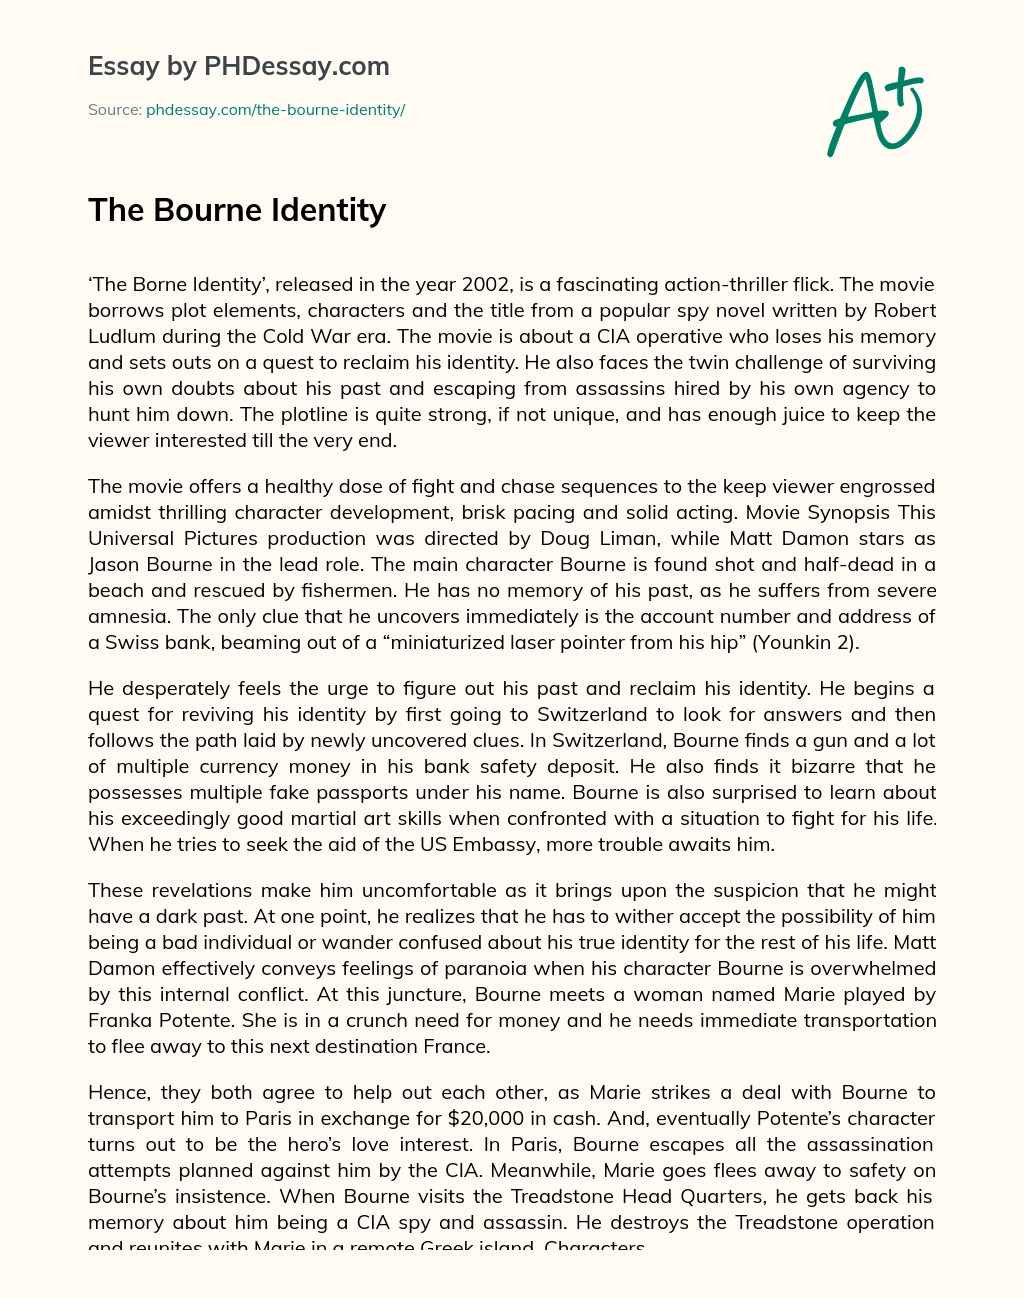 The  Bourne  Identity essay